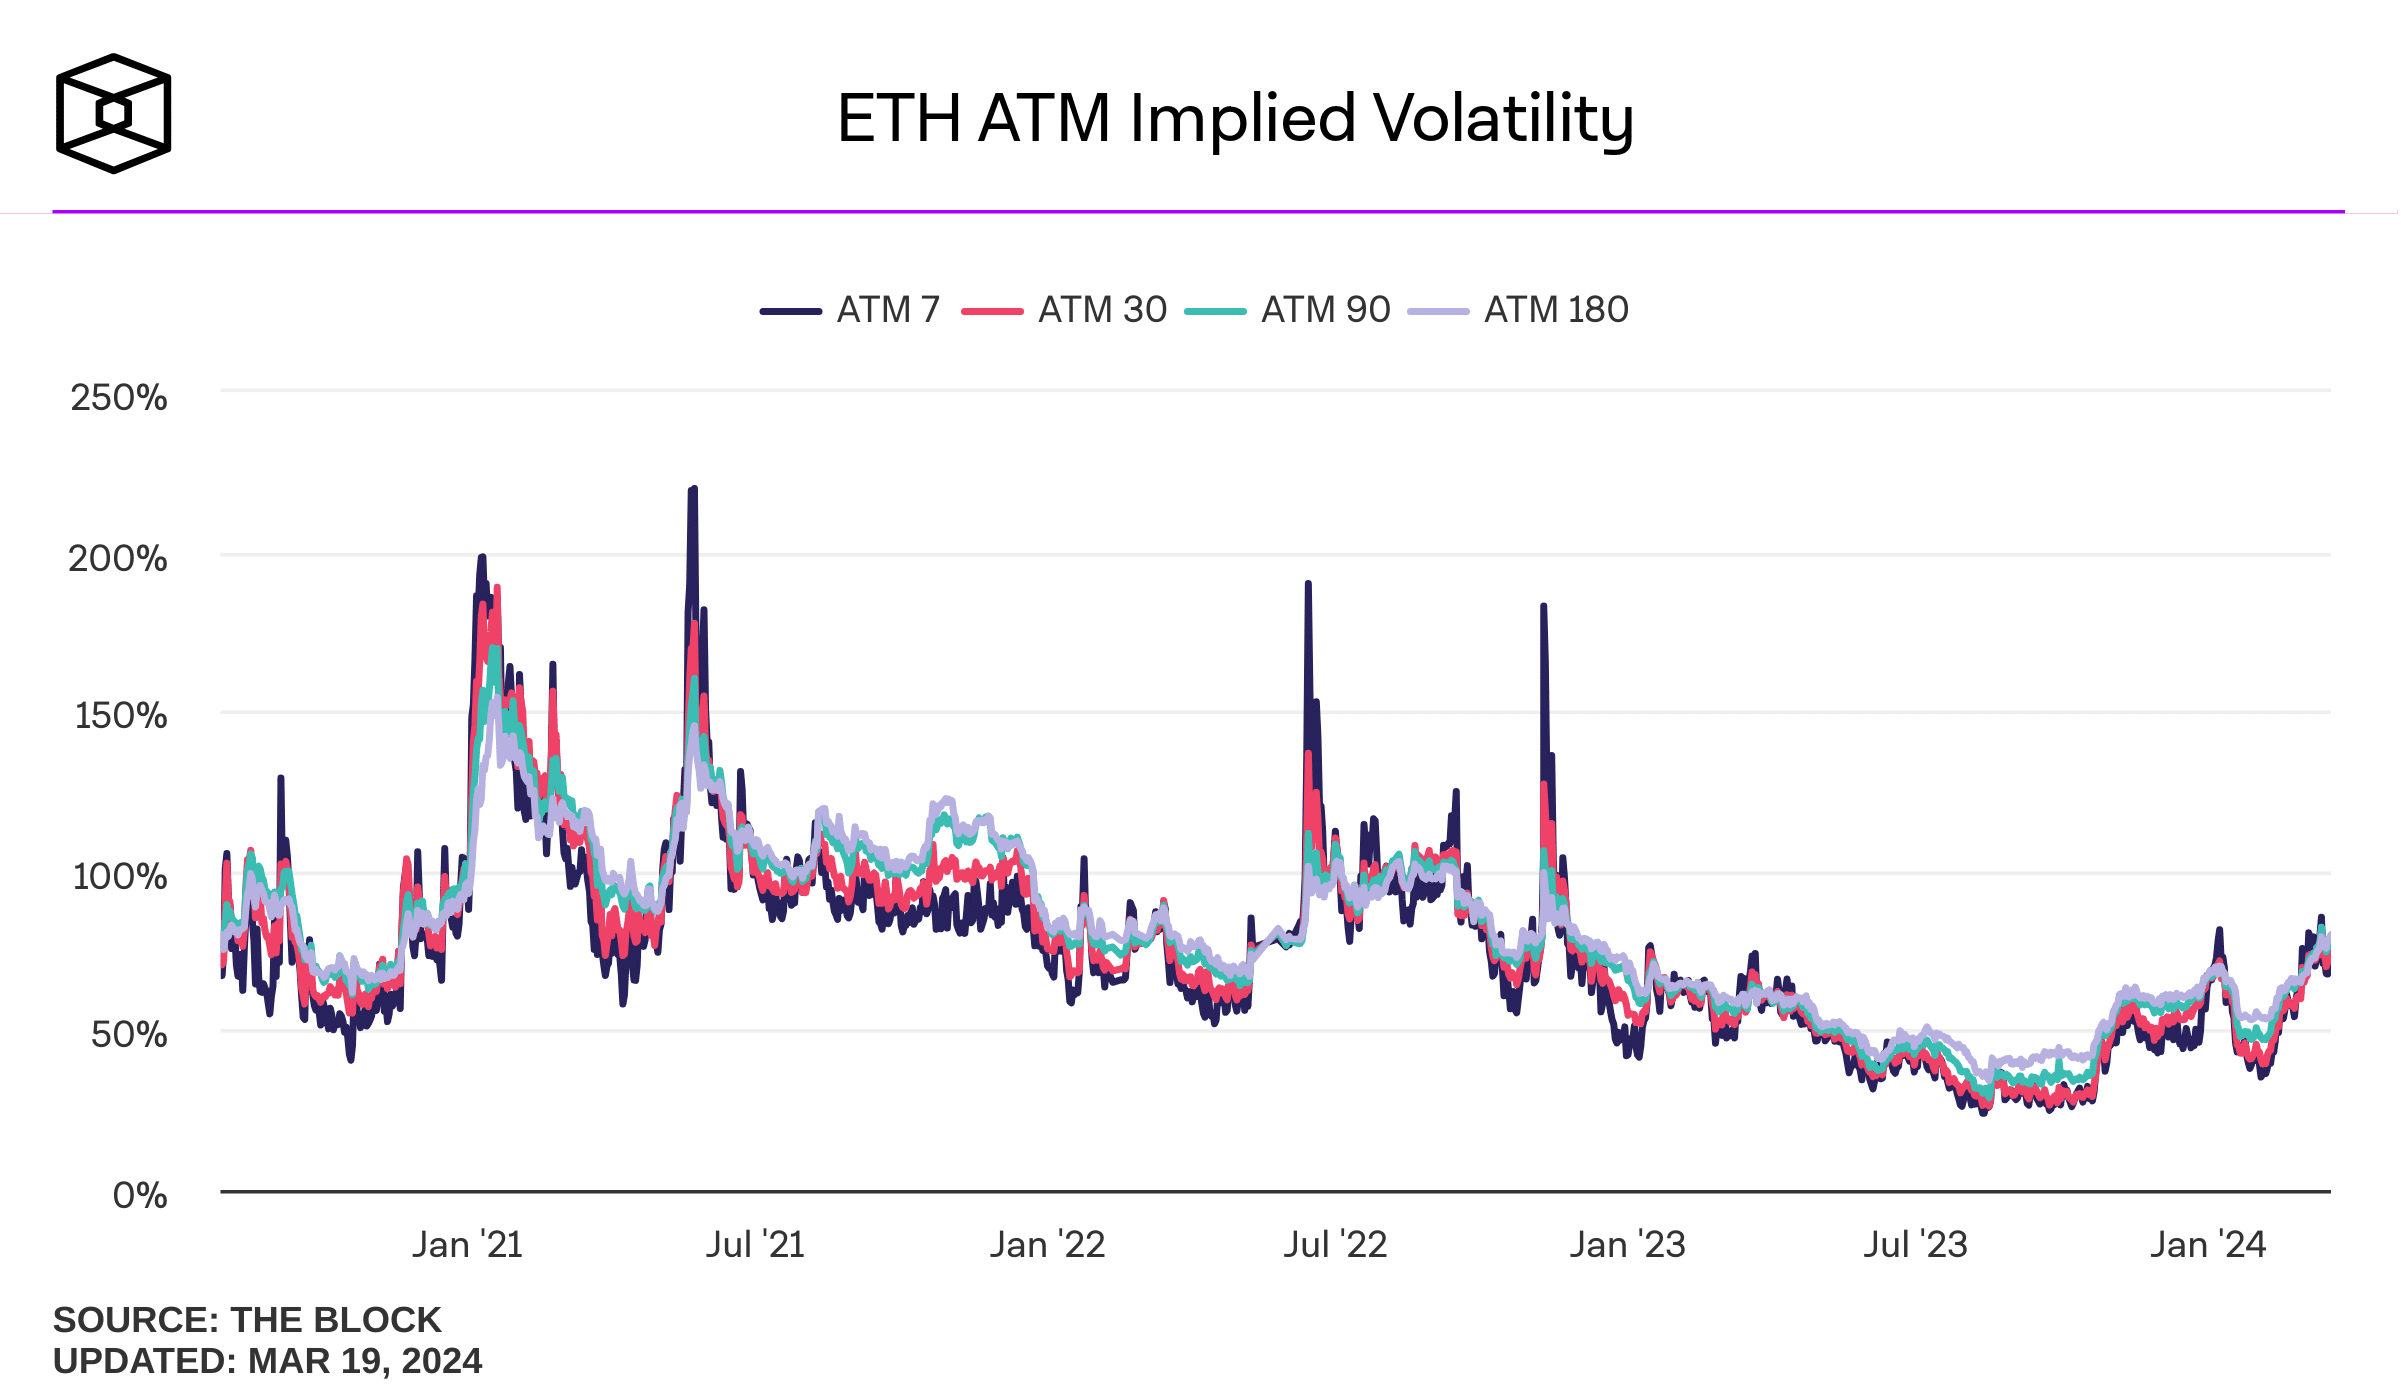 eth atm implied volatility